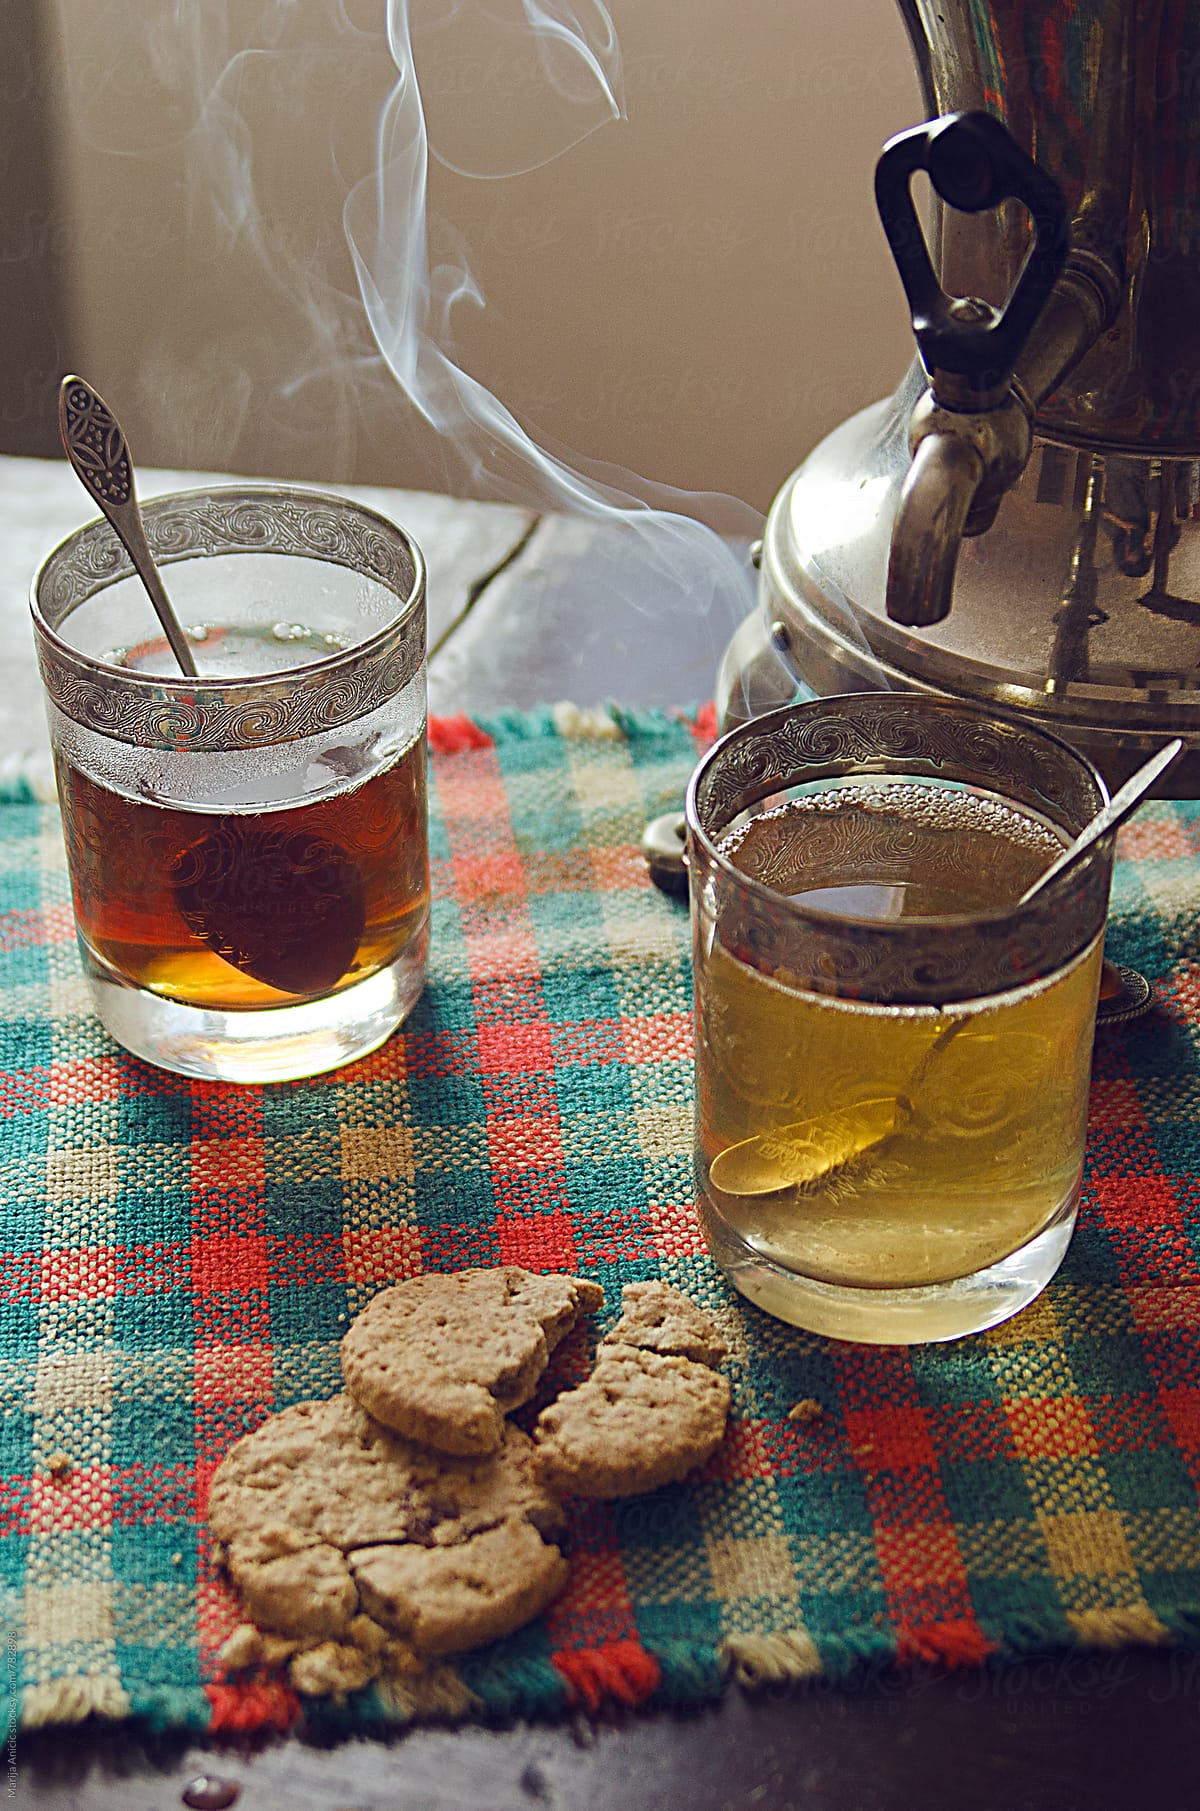 Russian samovar for making tea